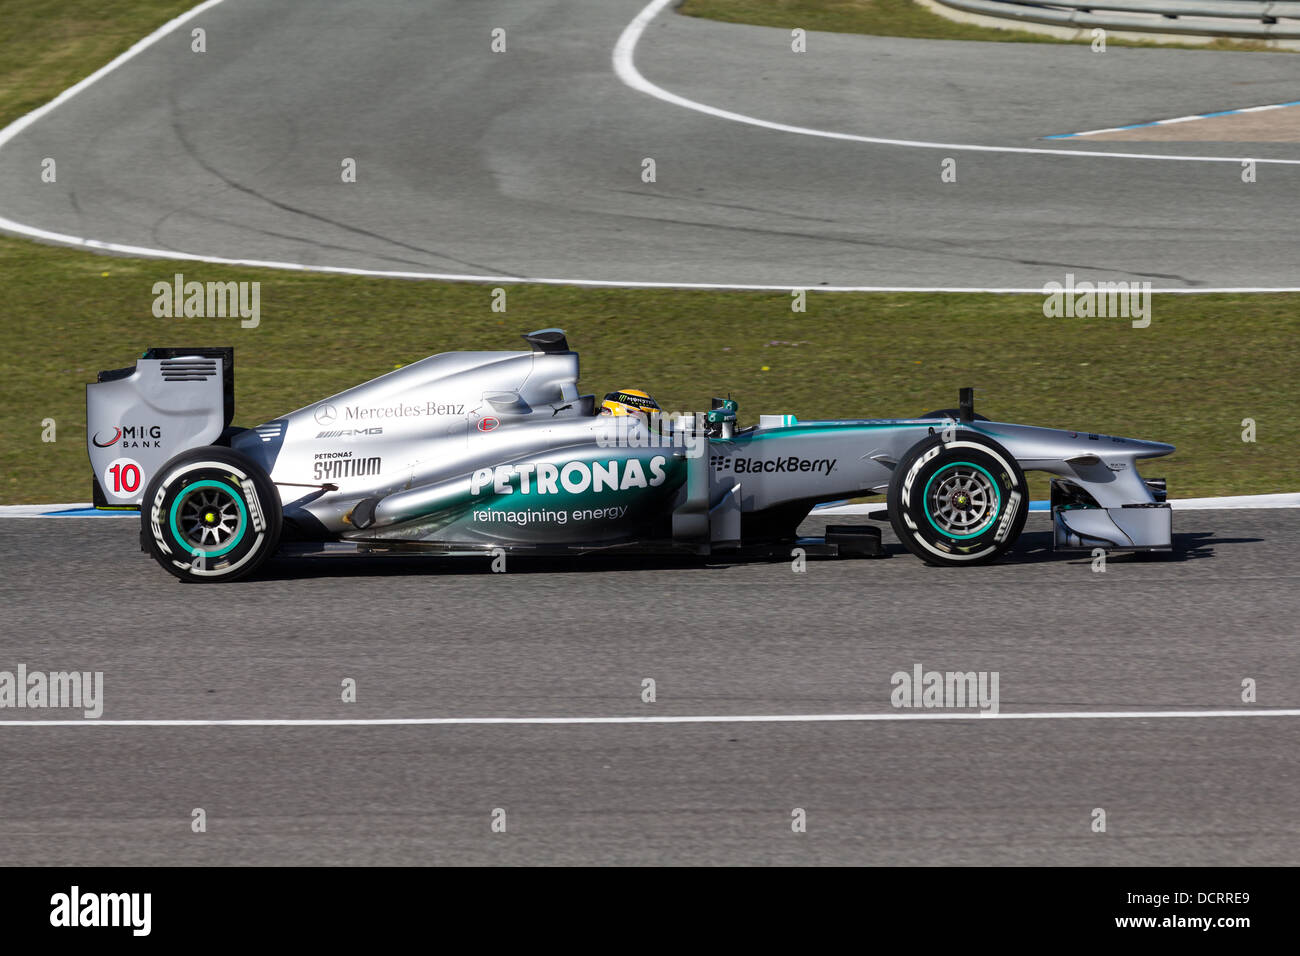 Mercedes AMG Petronas Formel 1 Team - Lewis Hamilton - 2013 Stockfotografie  - Alamy